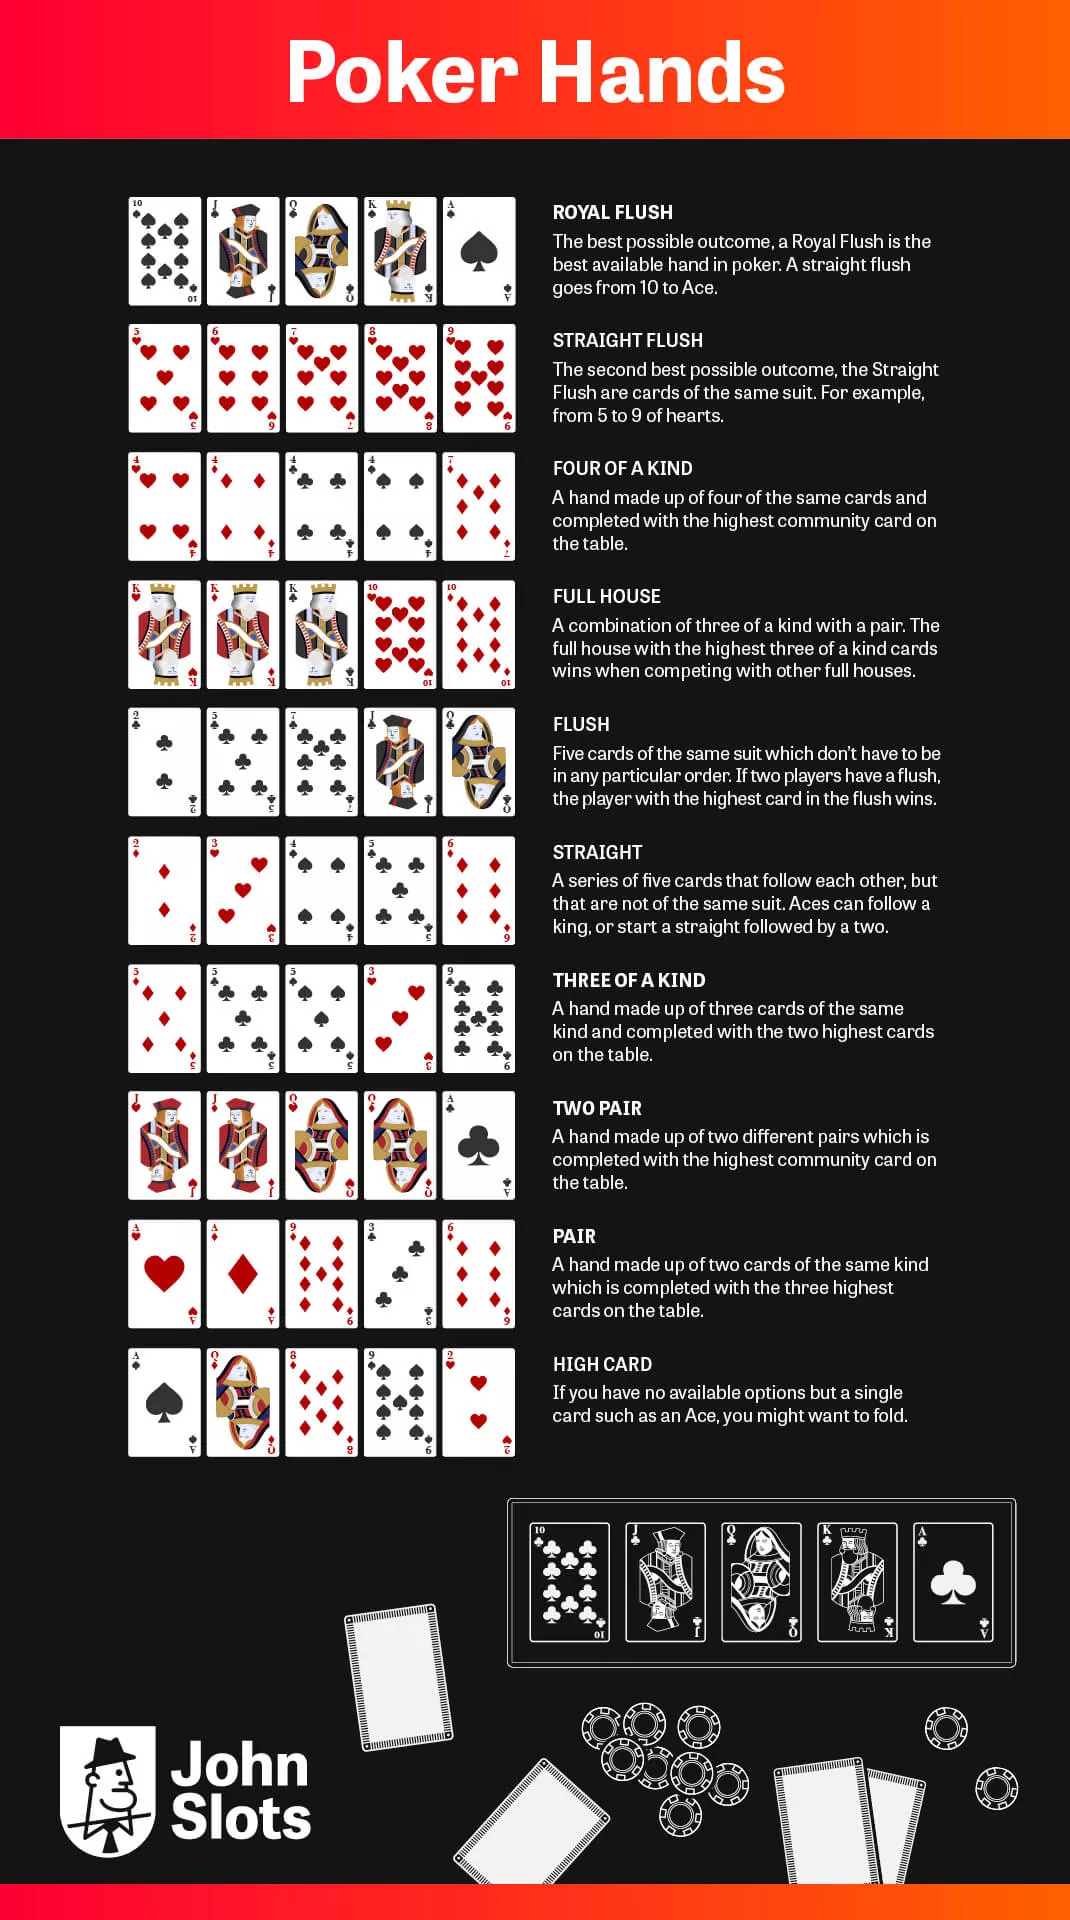 Poker rules guide - Poker Hands cheat sheet